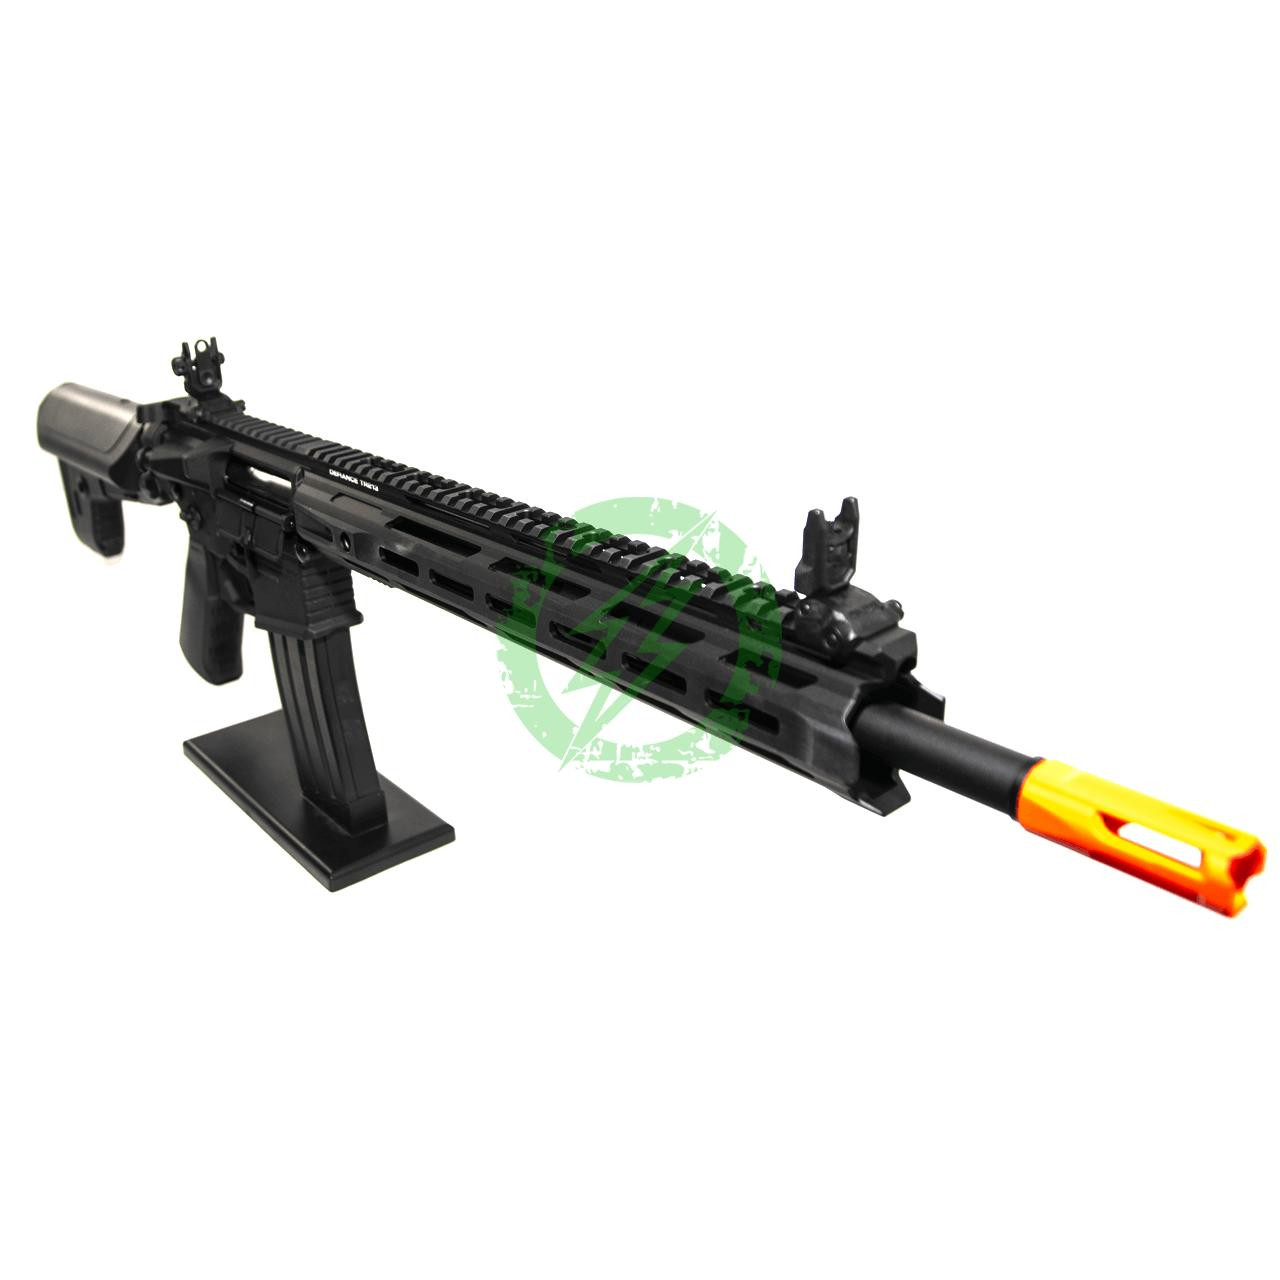  Krytac Full Metal Trident MKIIM SPR Rifle Black | MLOK 